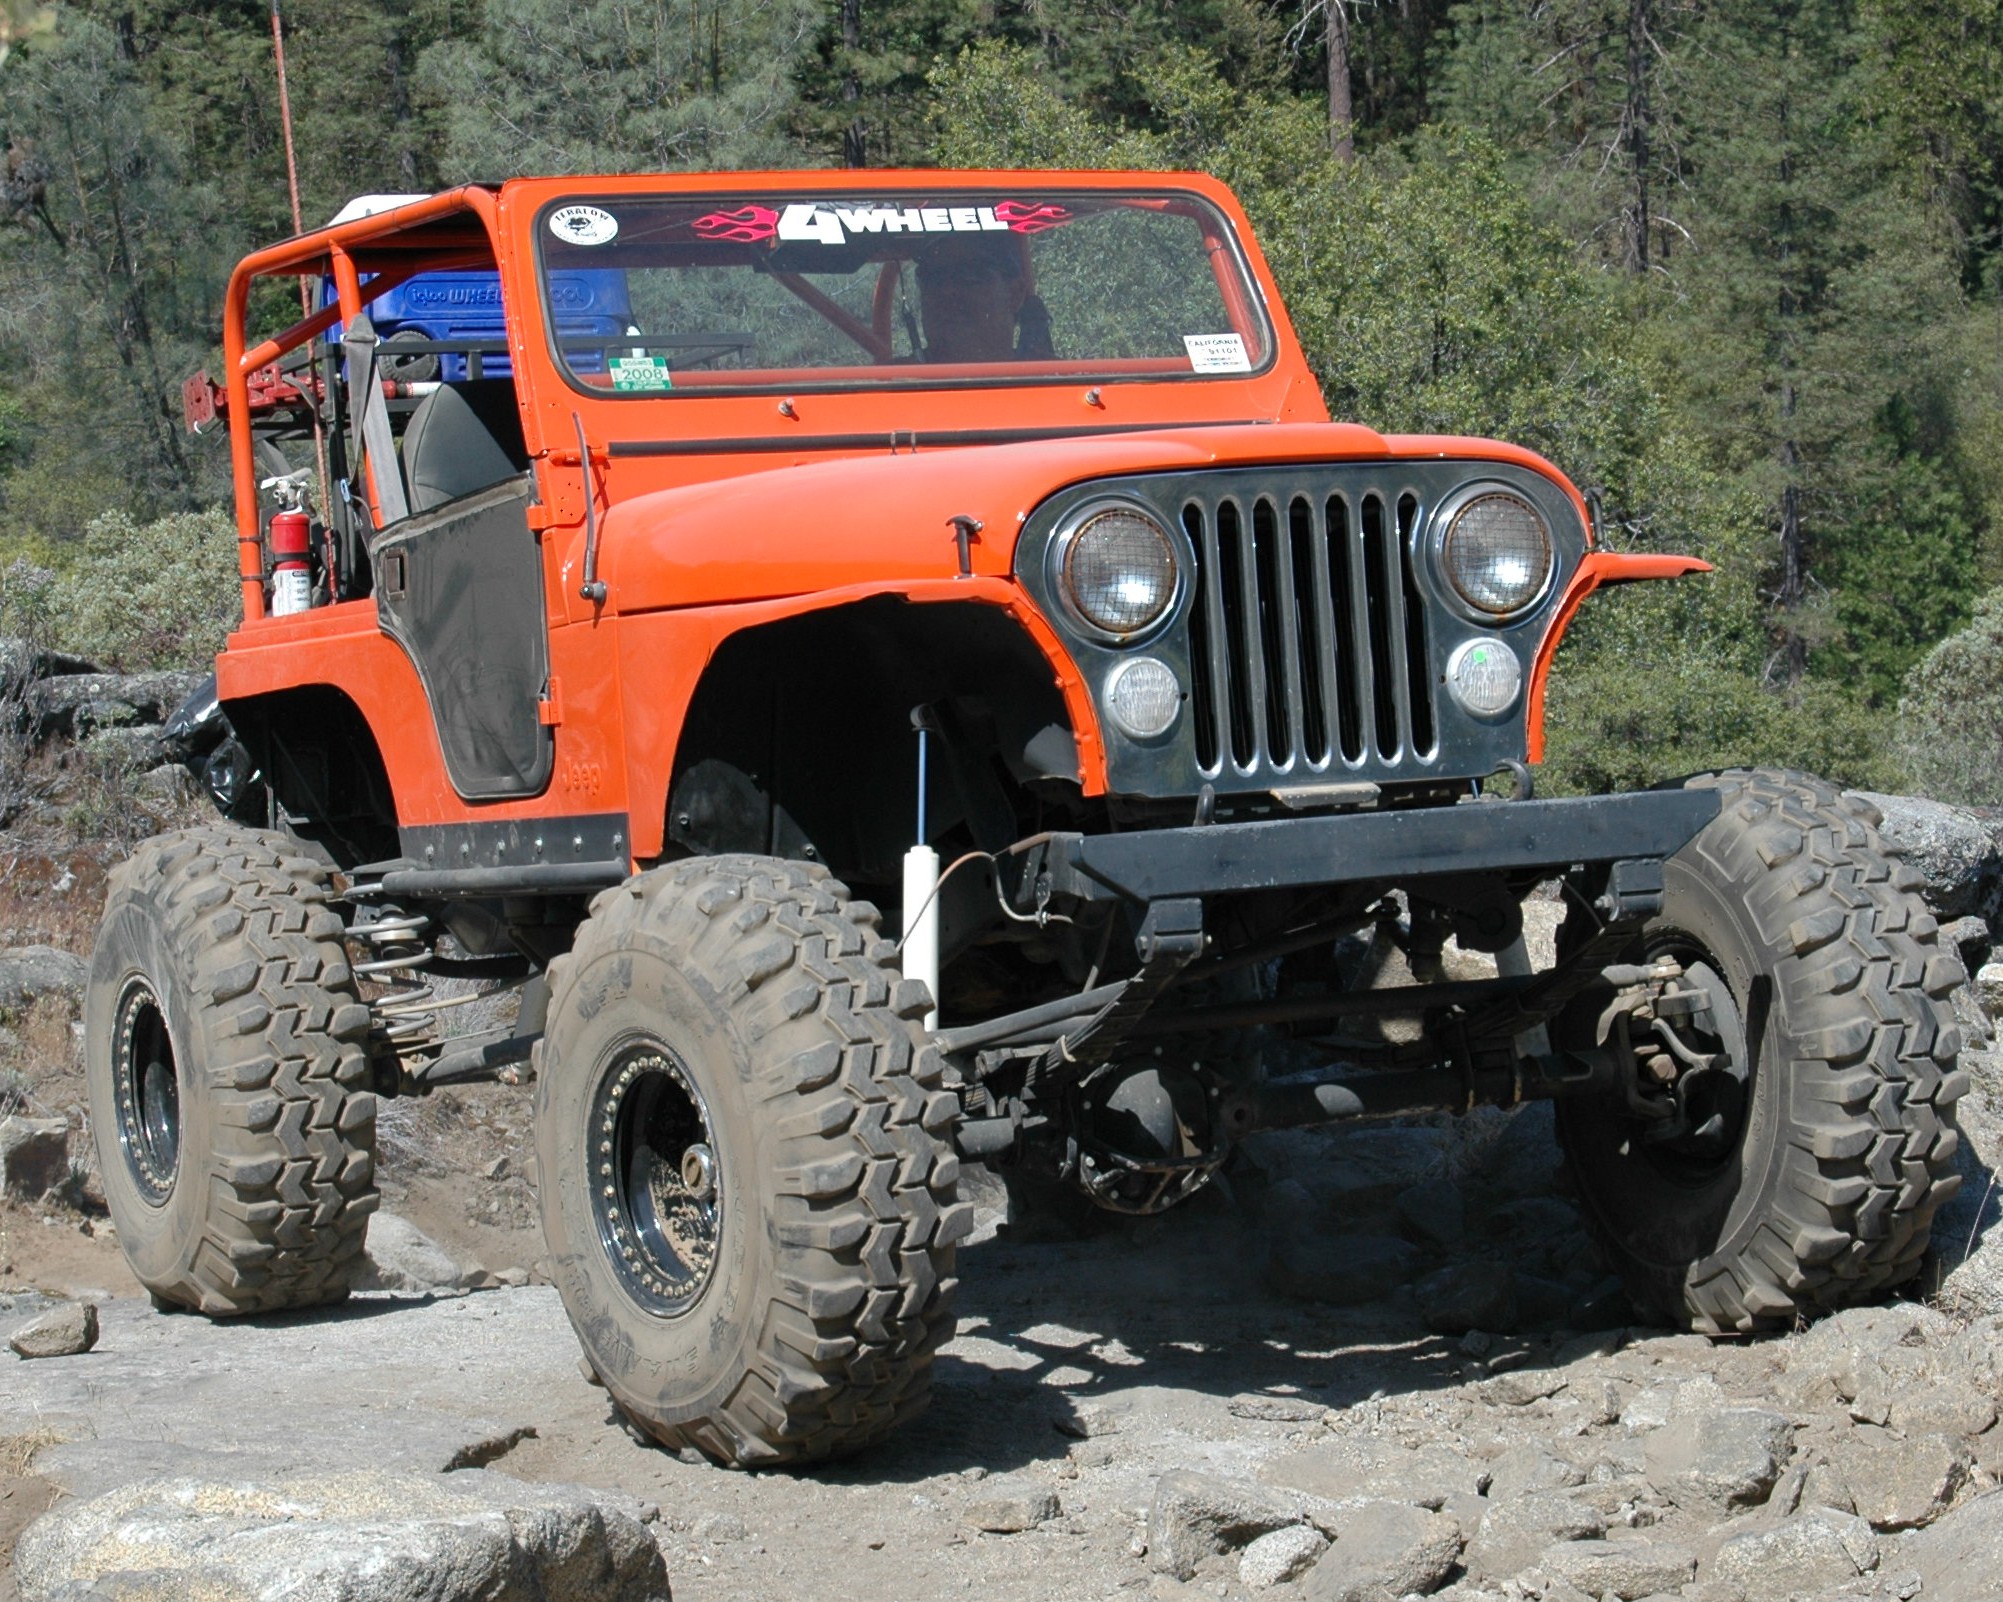 Rock Crawler Offroad Race Racing Jeep Monster